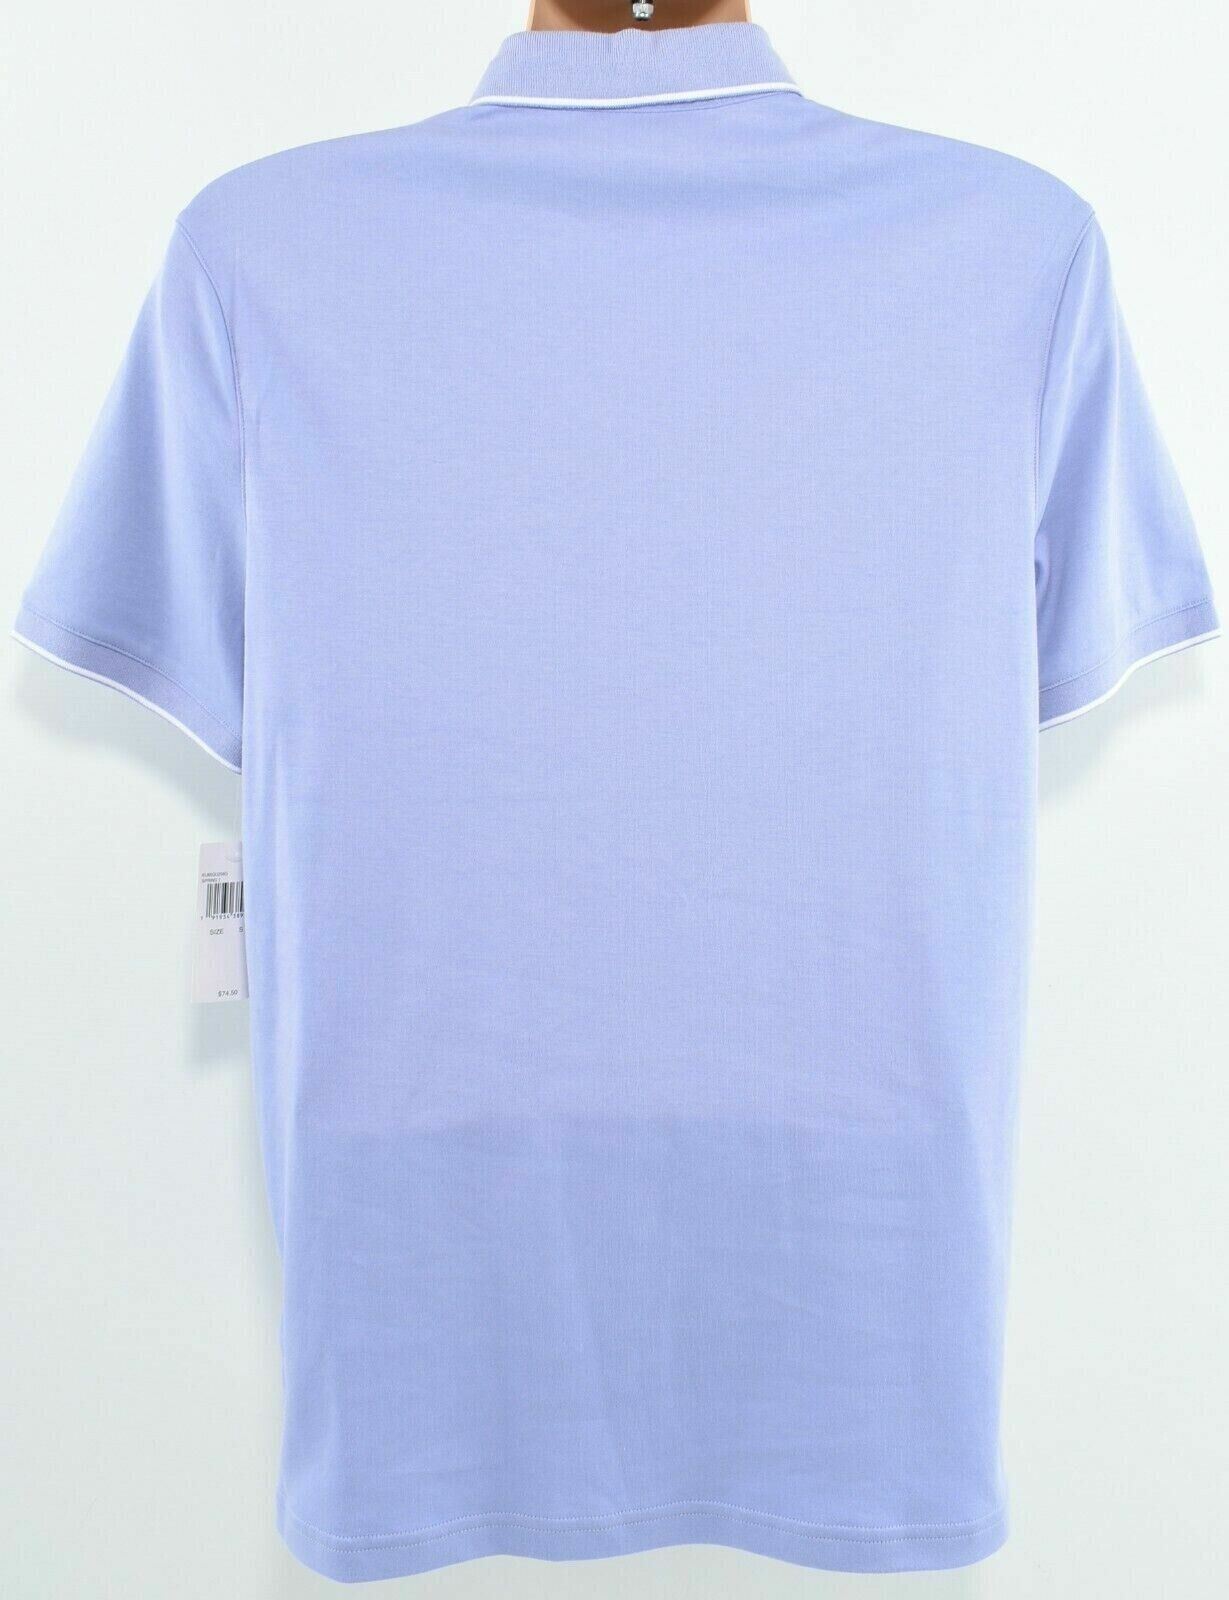 MICHAEL KORS Mens Cotton Jersey Polo Shirt, Thistle Purple, size SMALL